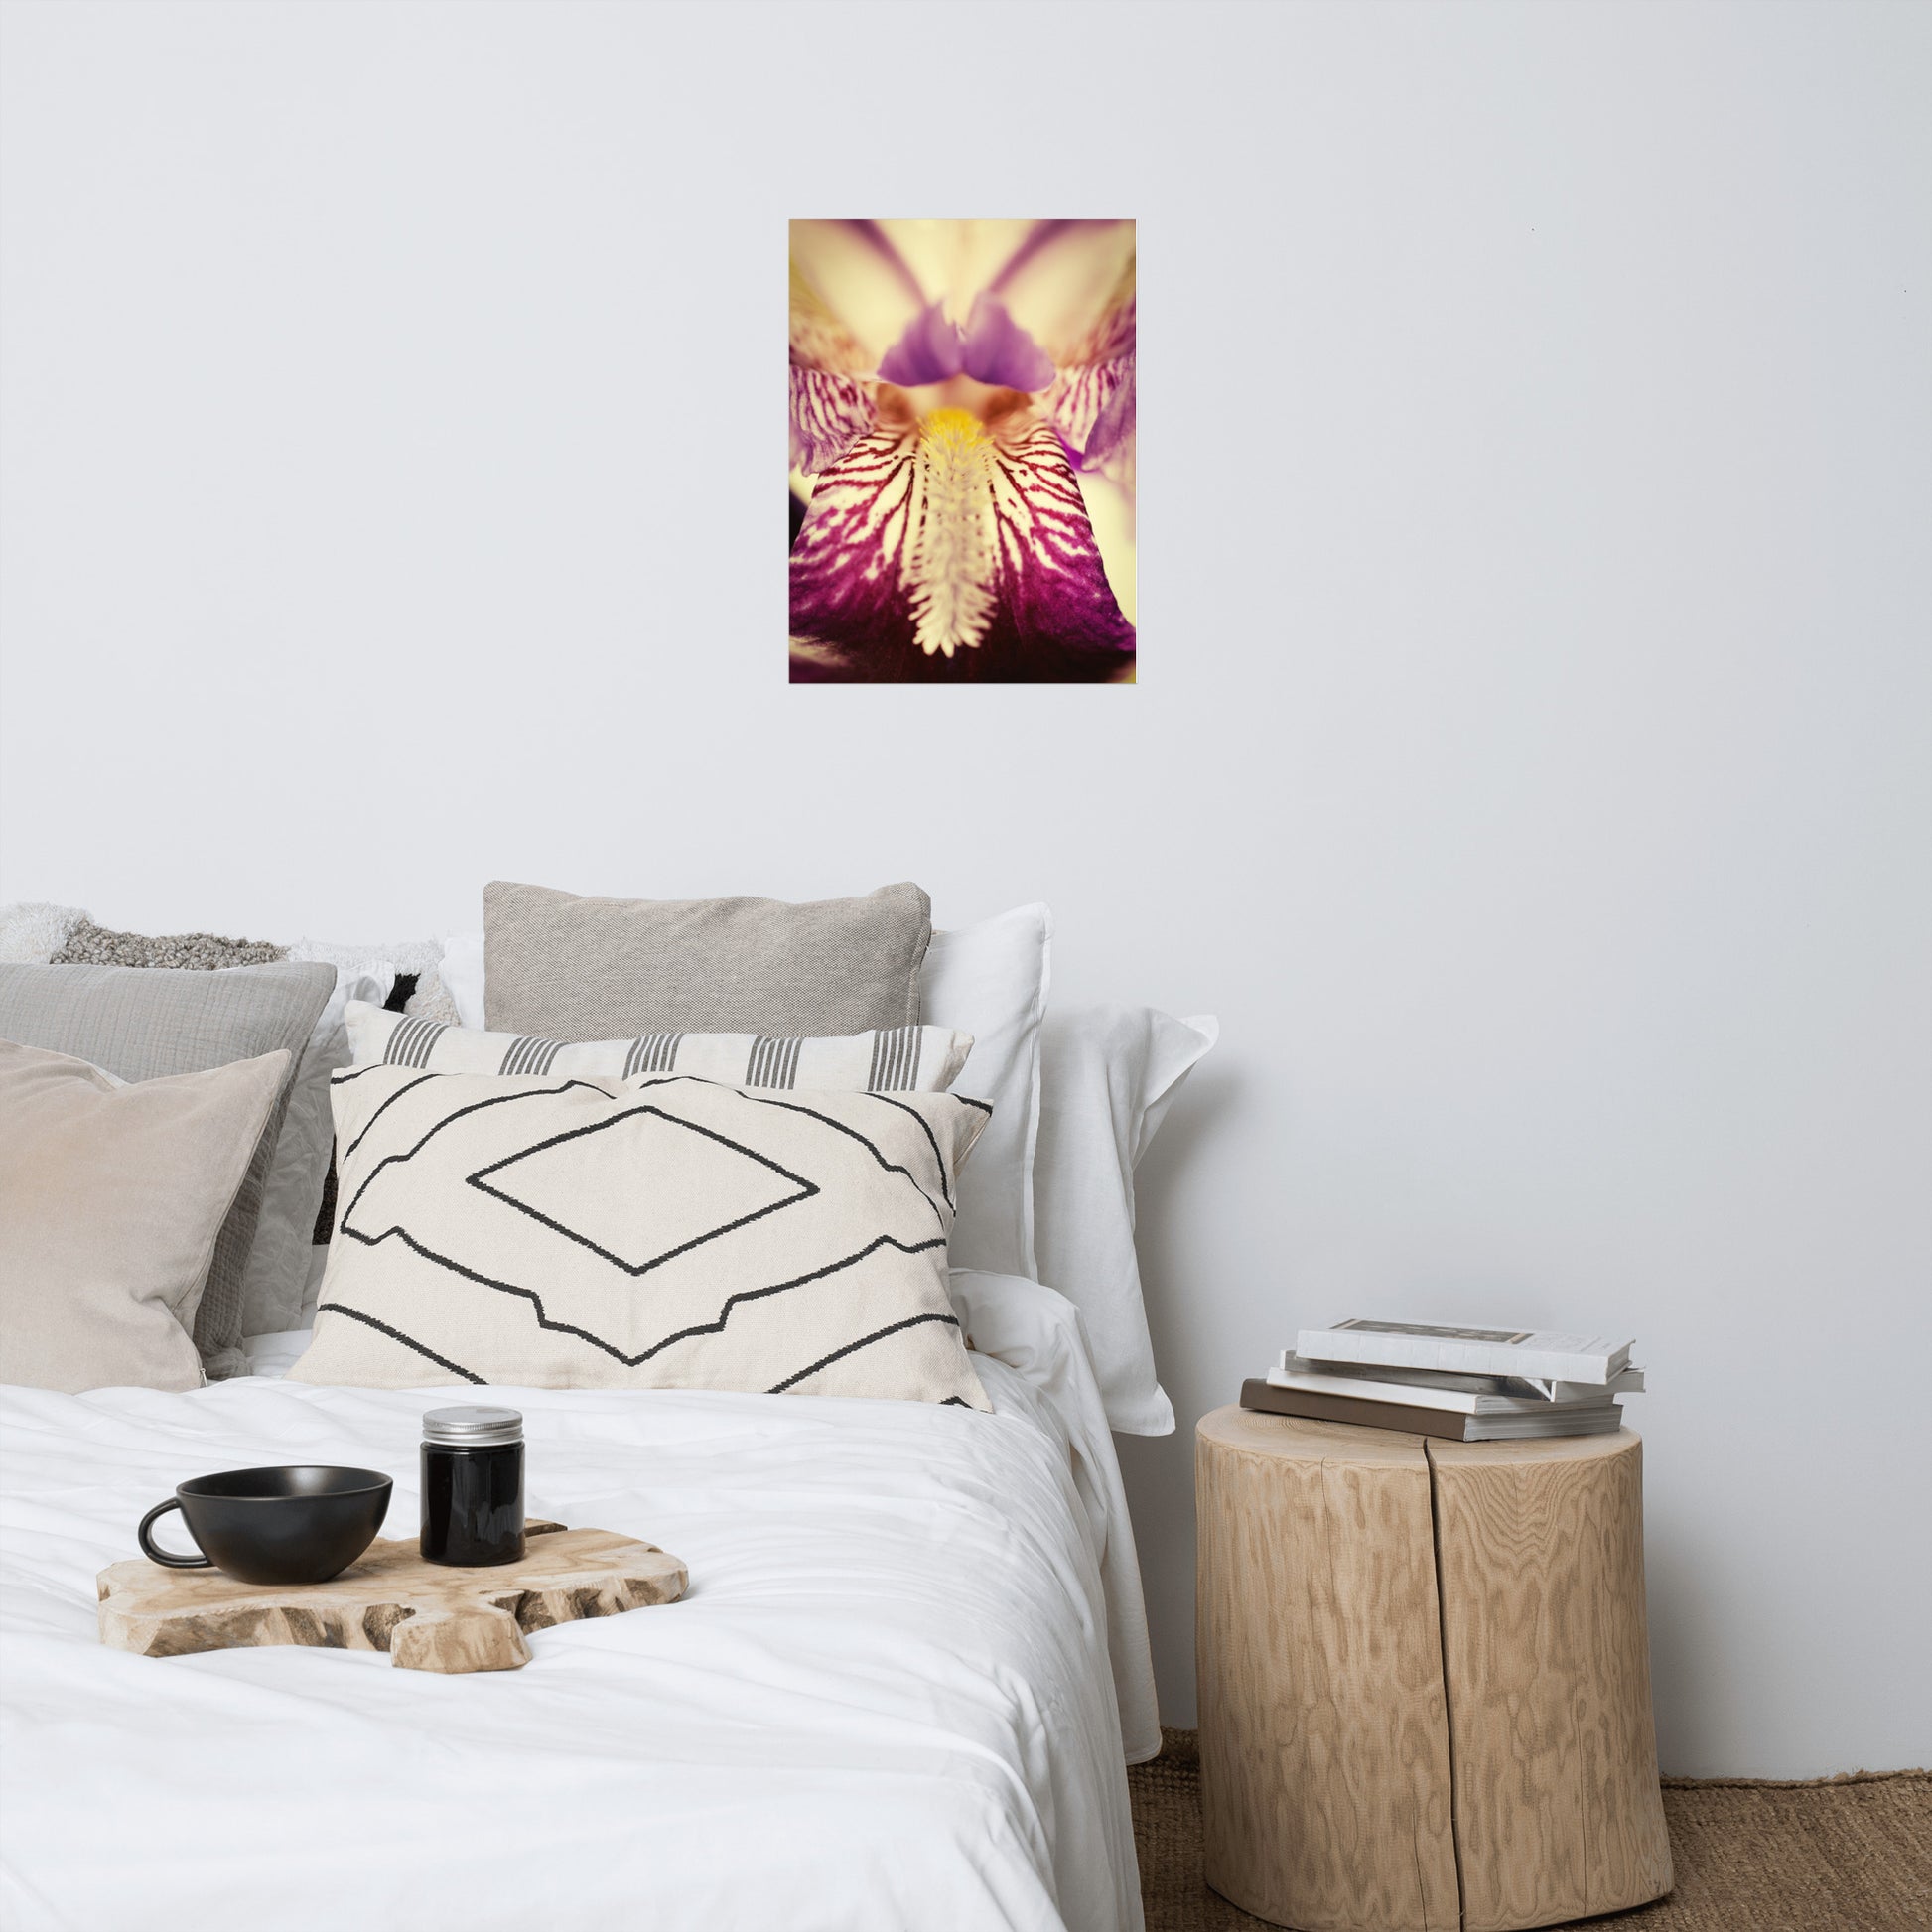 Floral Picture Wall: Antiqued Iris - Botanical / Floral / Flora / Flowers / Nature Photograph Loose / Unframed / Frameless / Frameable Wall Art Print - Artwork